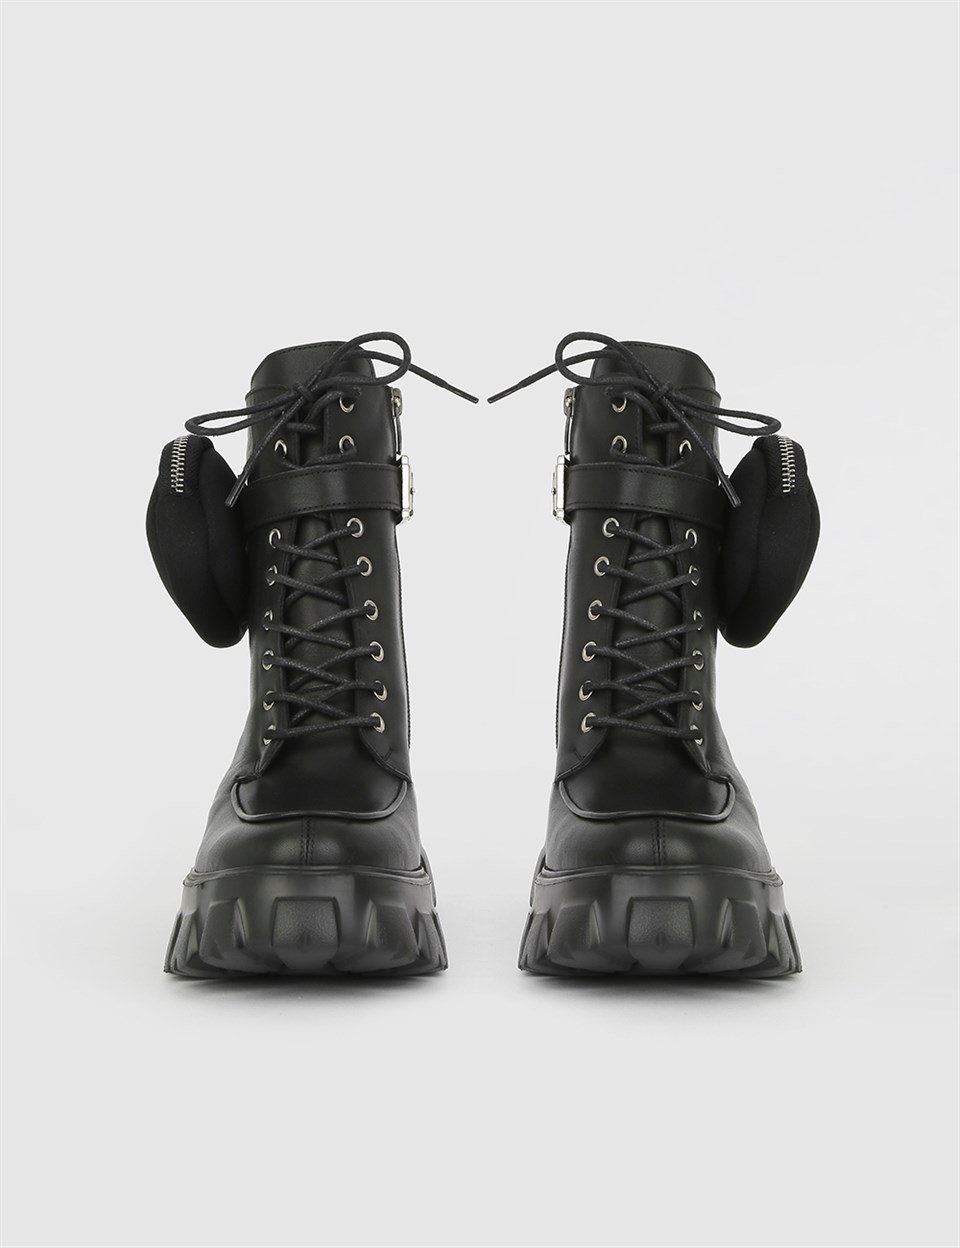 Glasyo Black Leather Women's Boot - İLVİ